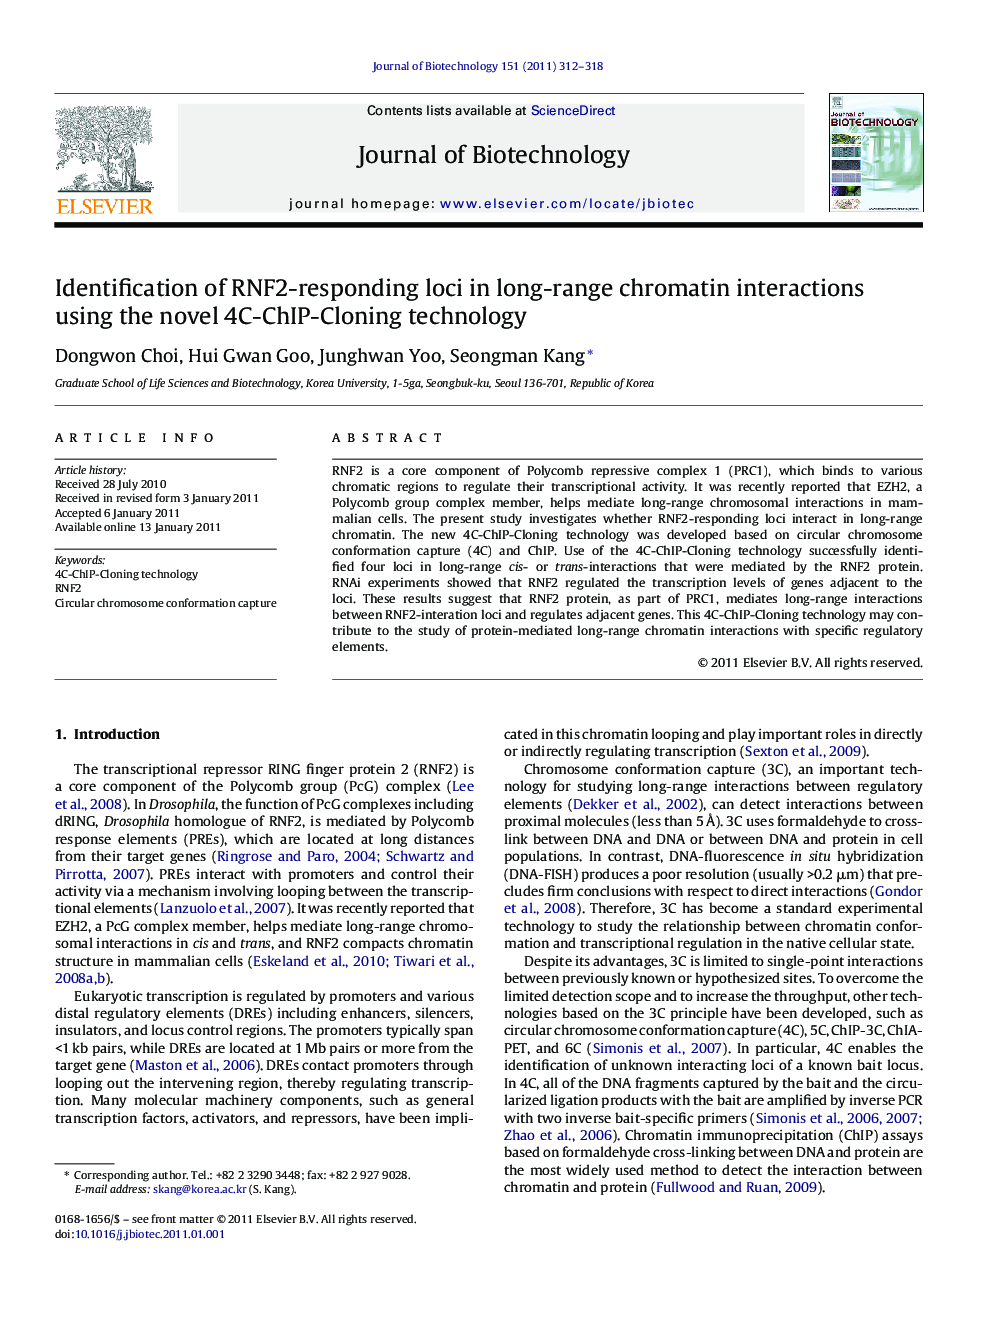 Identification of RNF2-responding loci in long-range chromatin interactions using the novel 4C-ChIP-Cloning technology